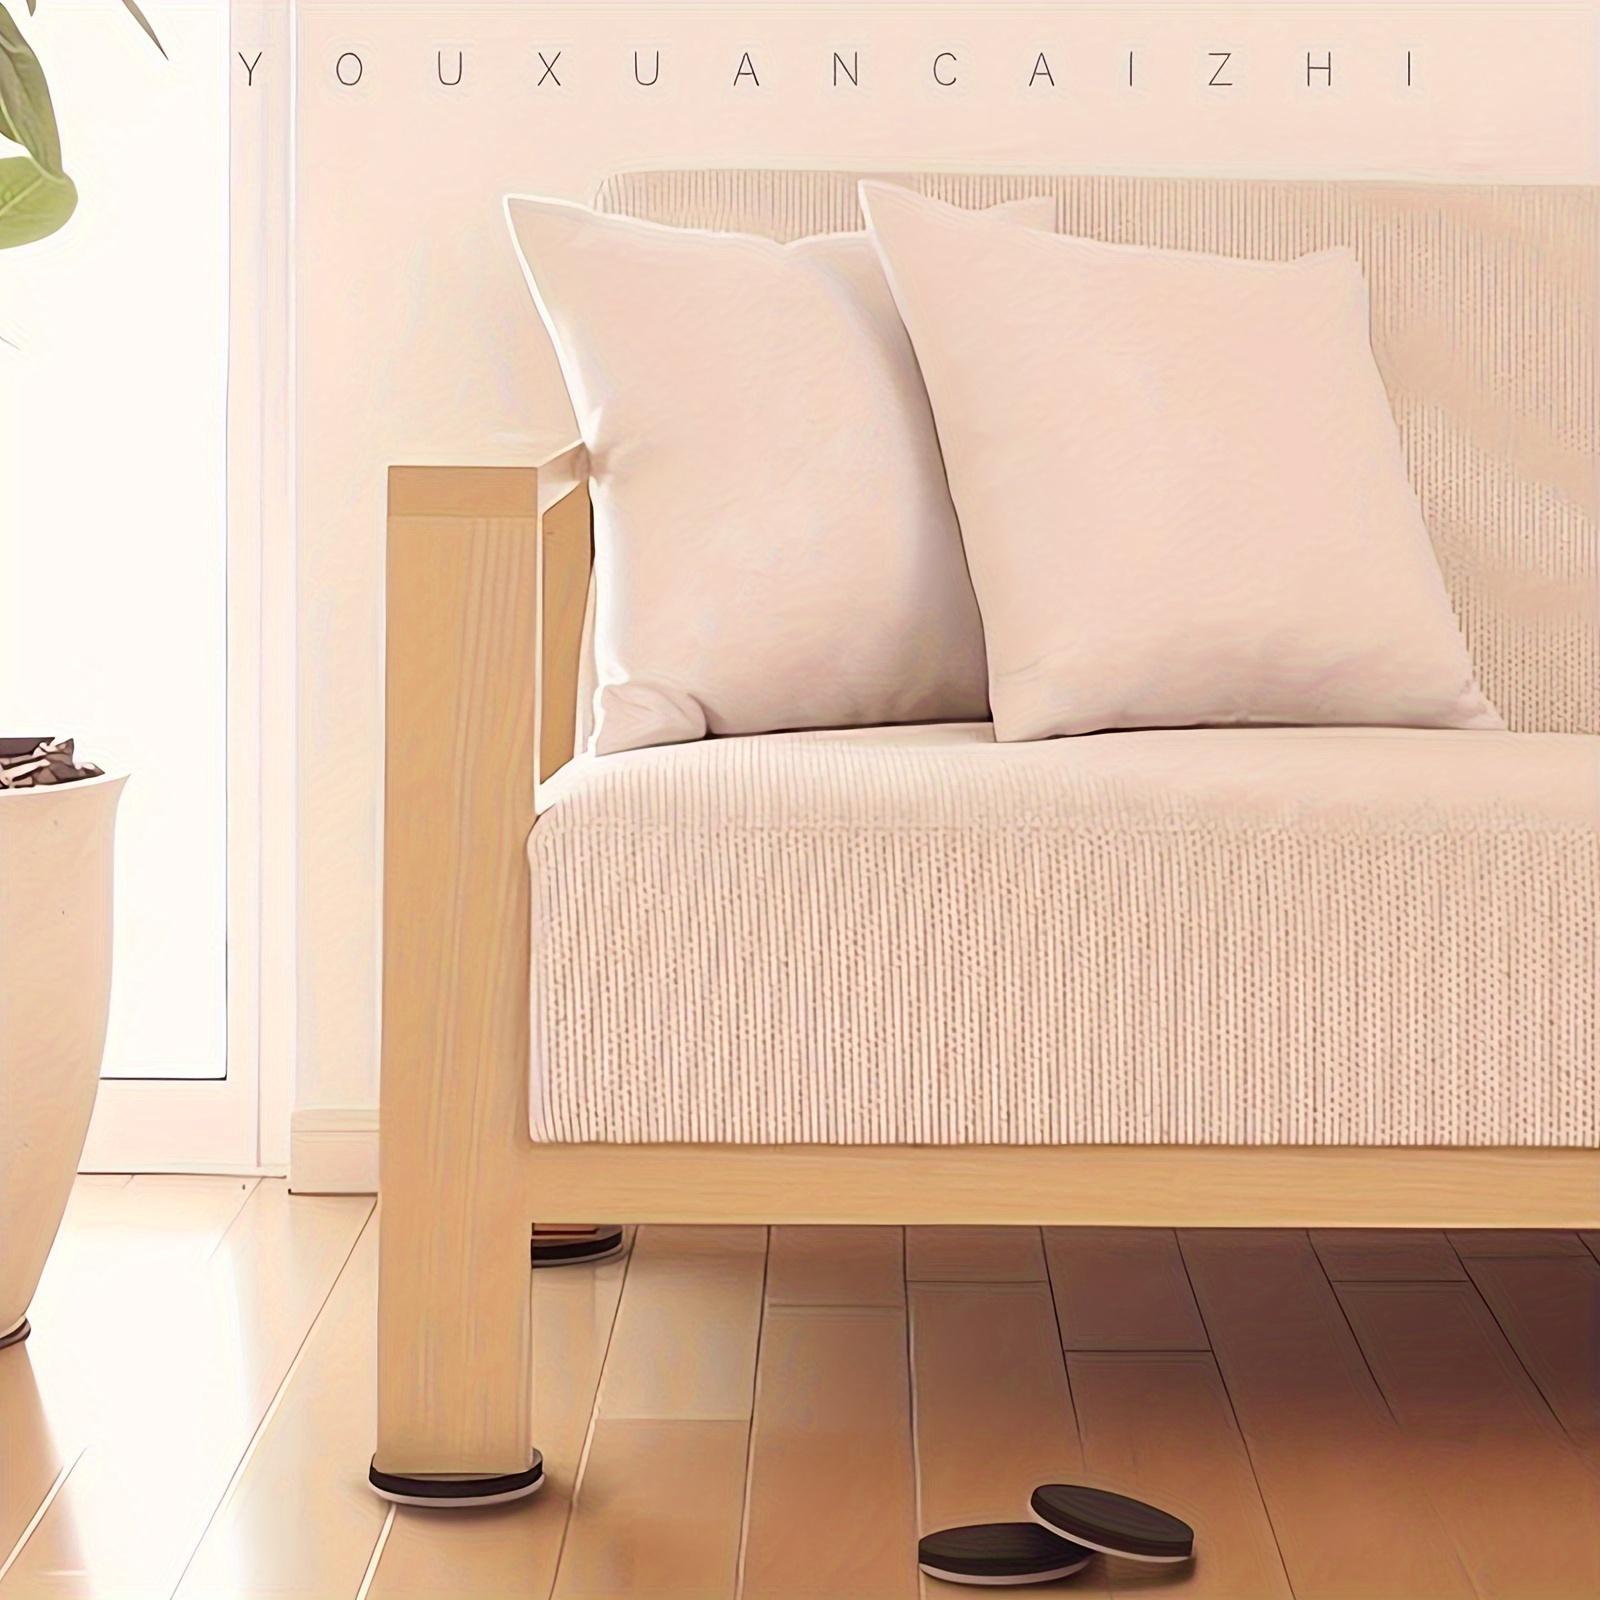 Furniture Sliders For Carpet Hardwood Floor Felt Protectors - Temu